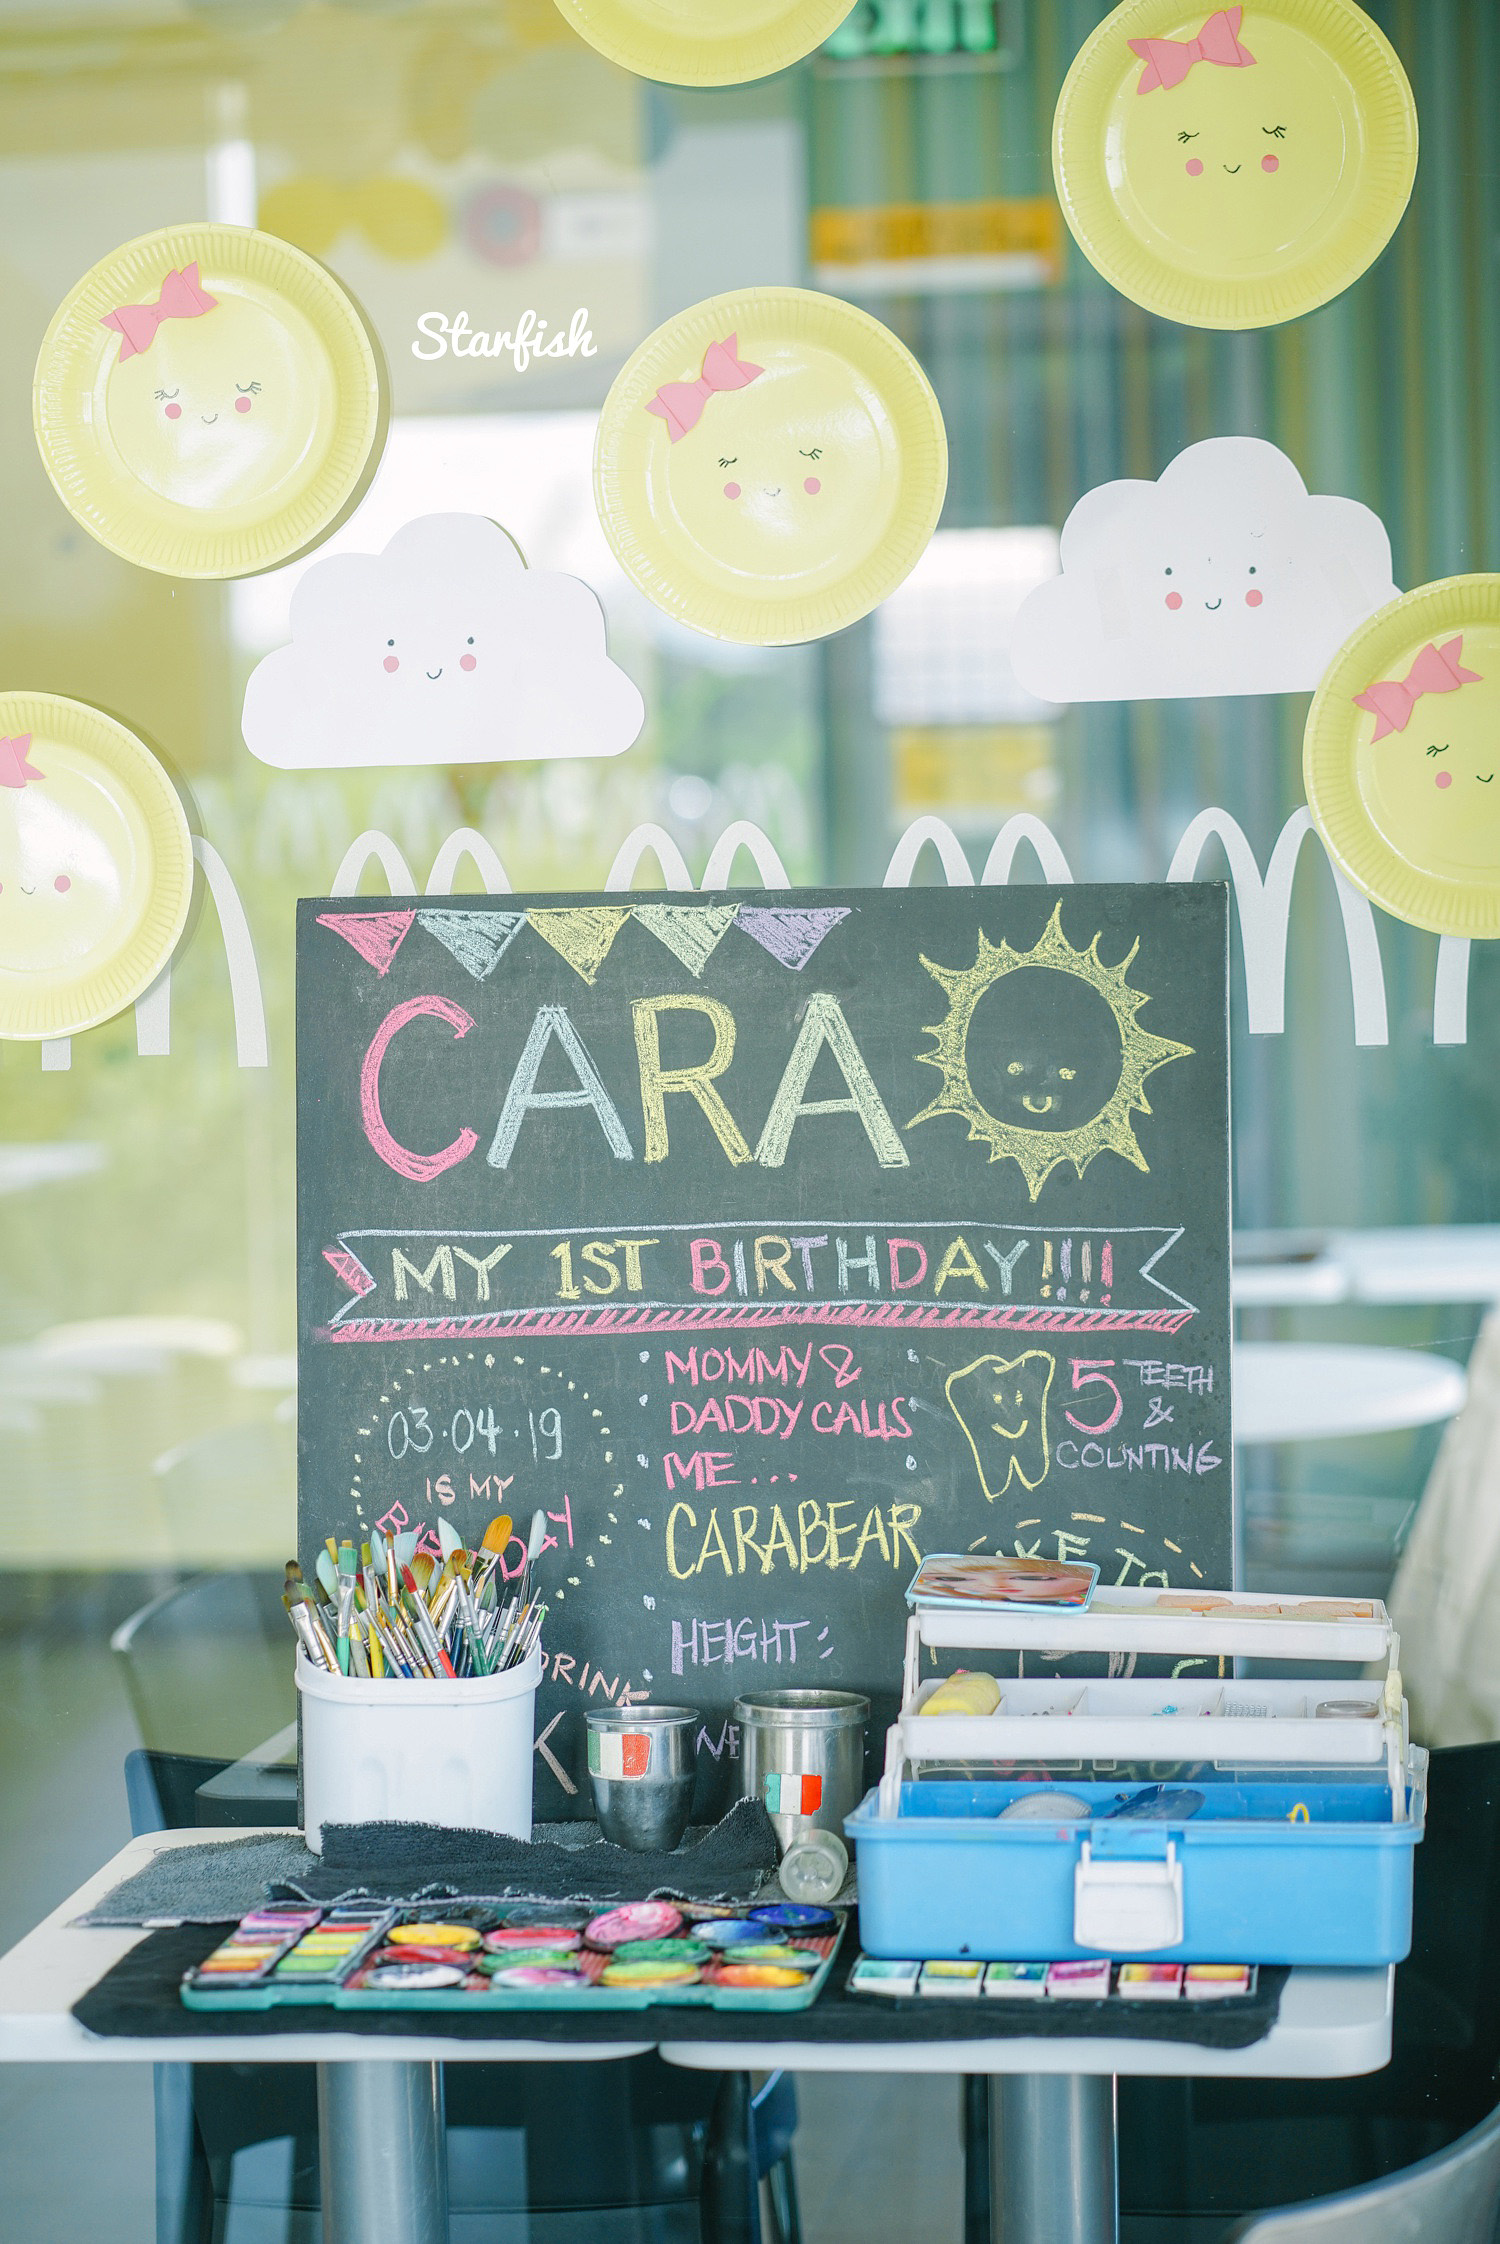 Cara's 1st Birthday